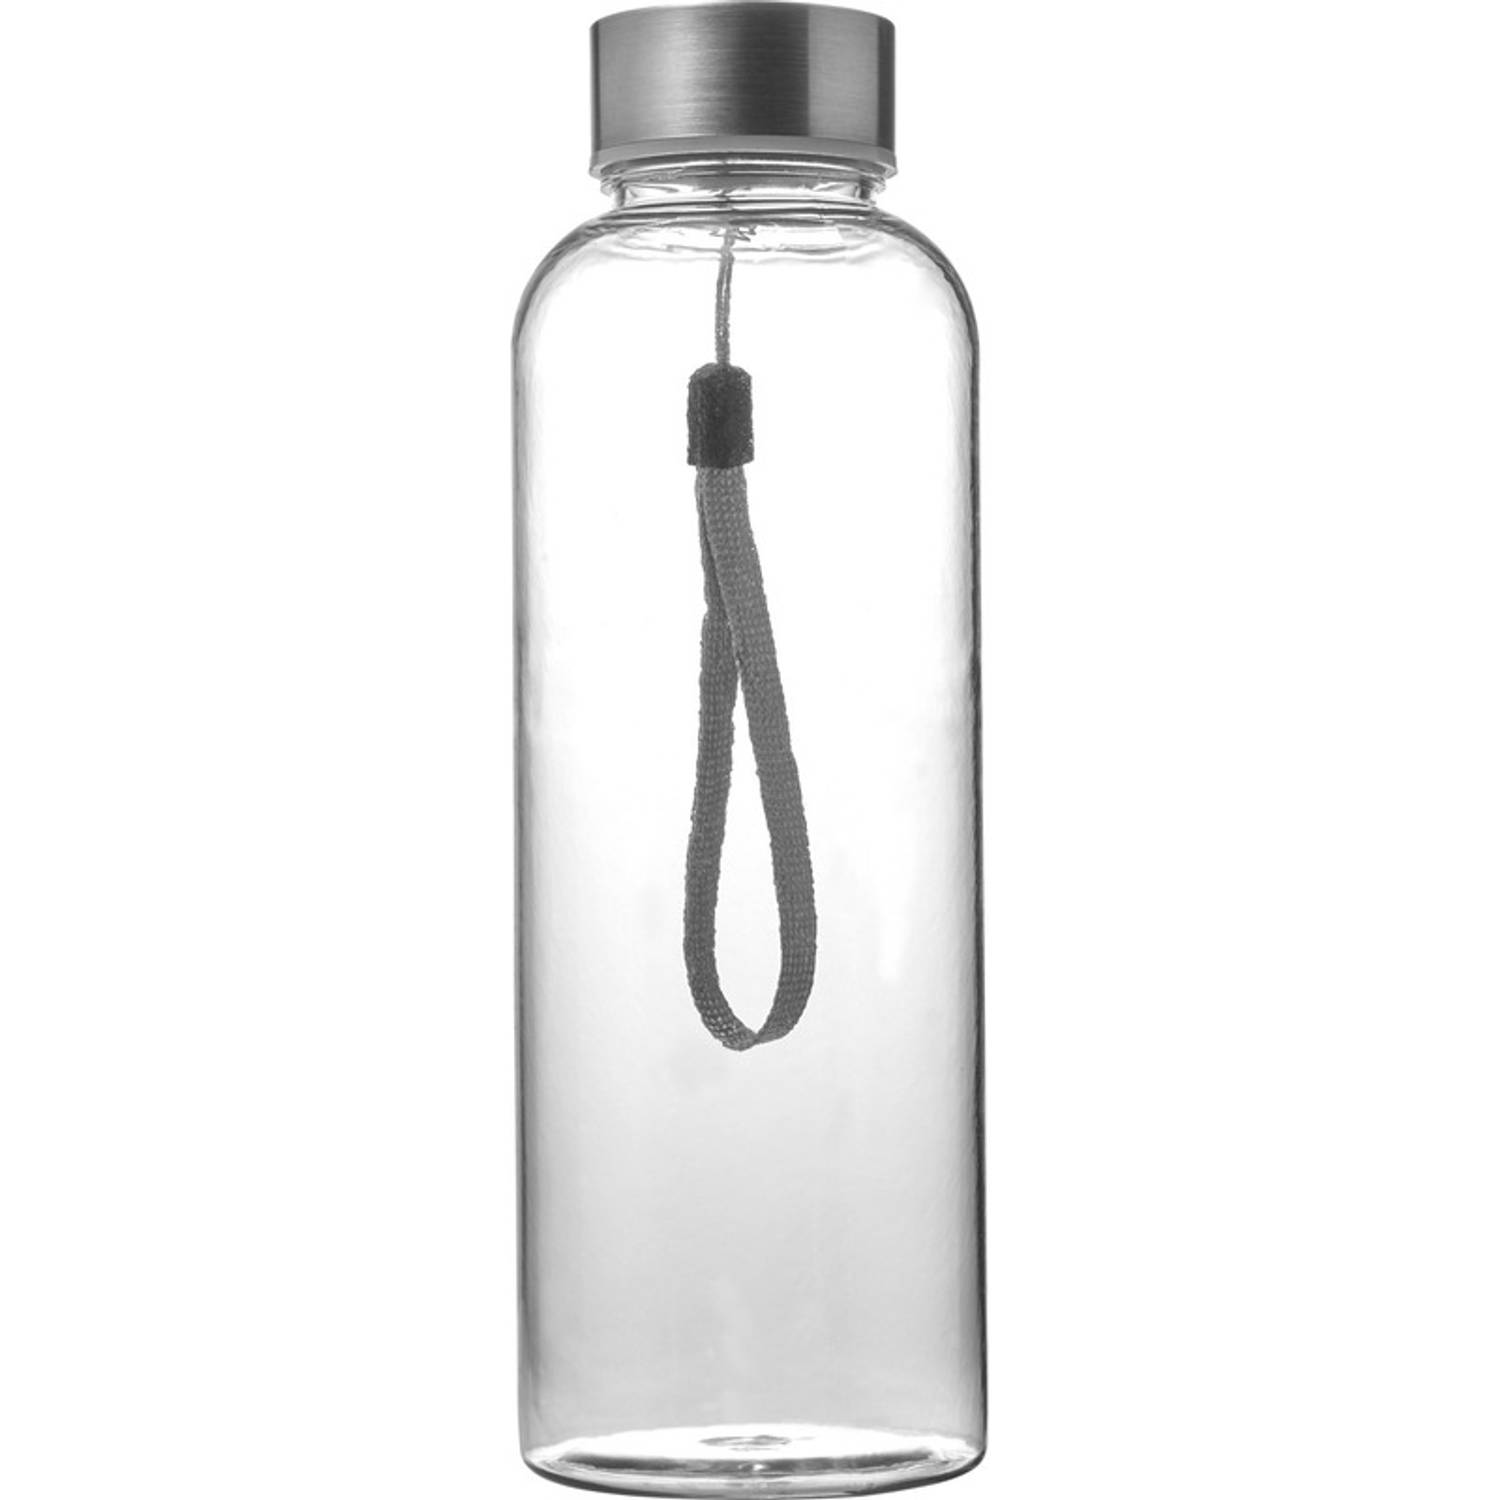 Sport waterfles 500 ml transparant - Drinkflessen